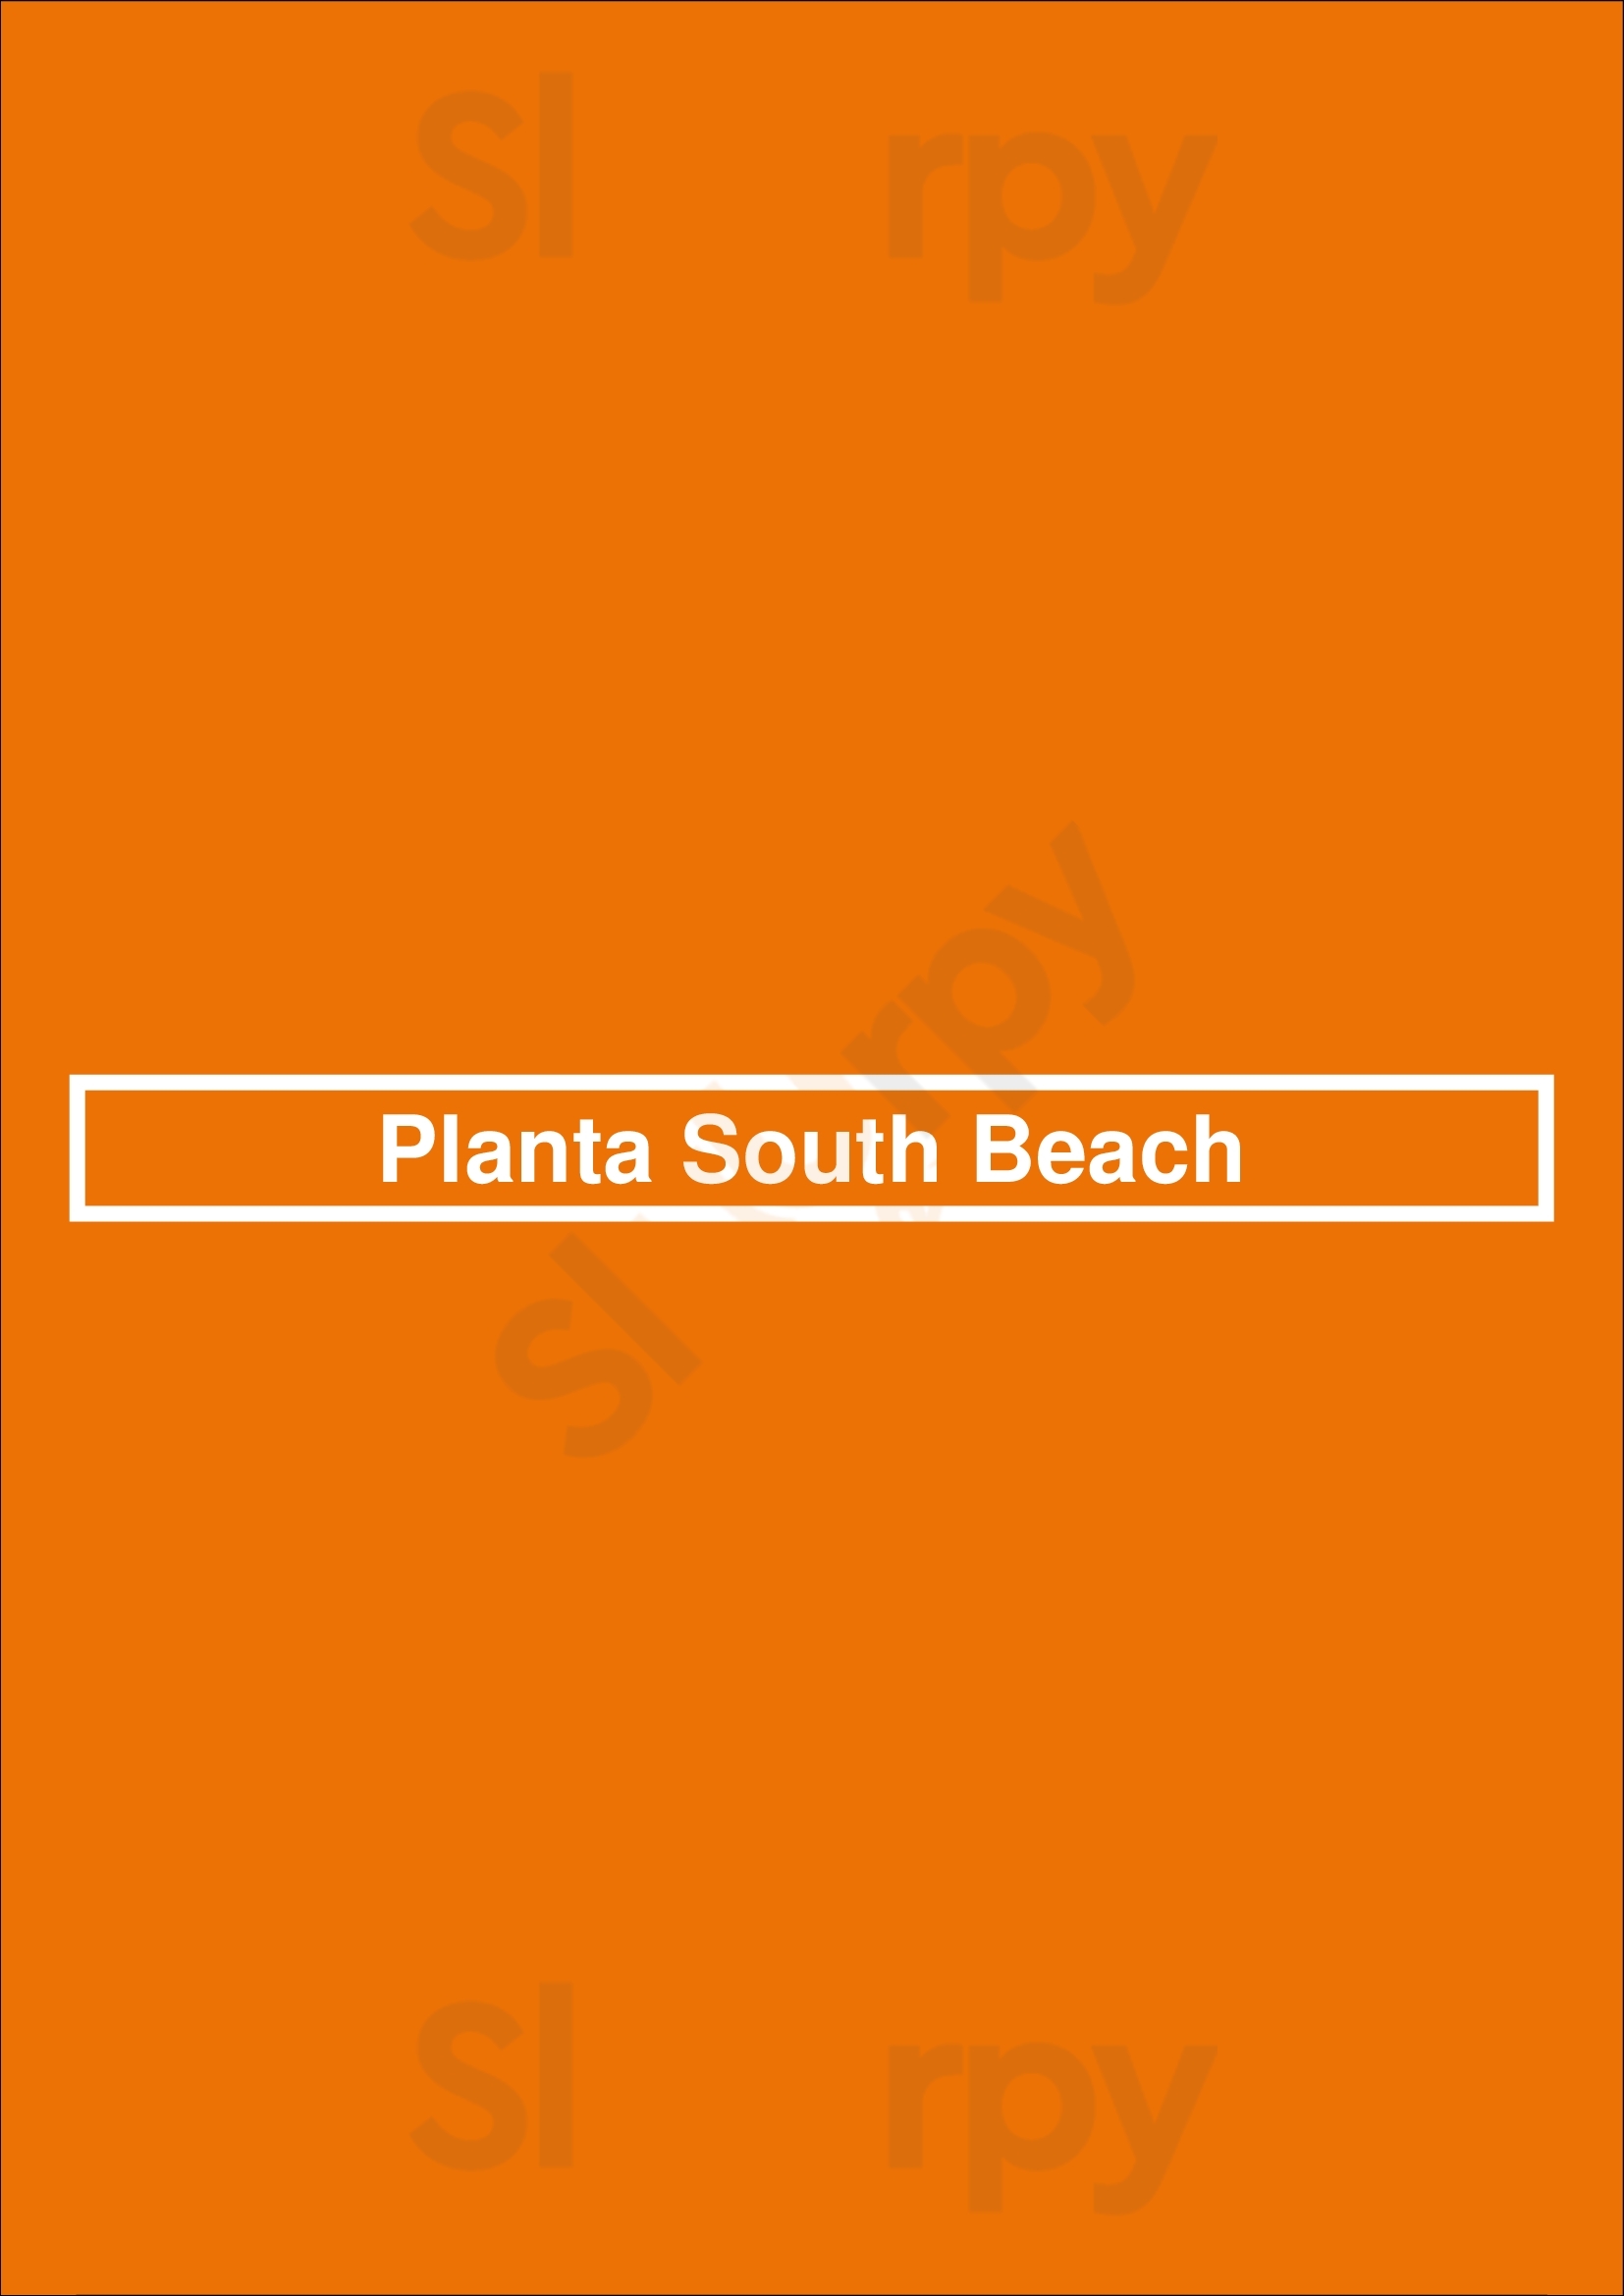 Planta South Beach Miami Beach Menu - 1